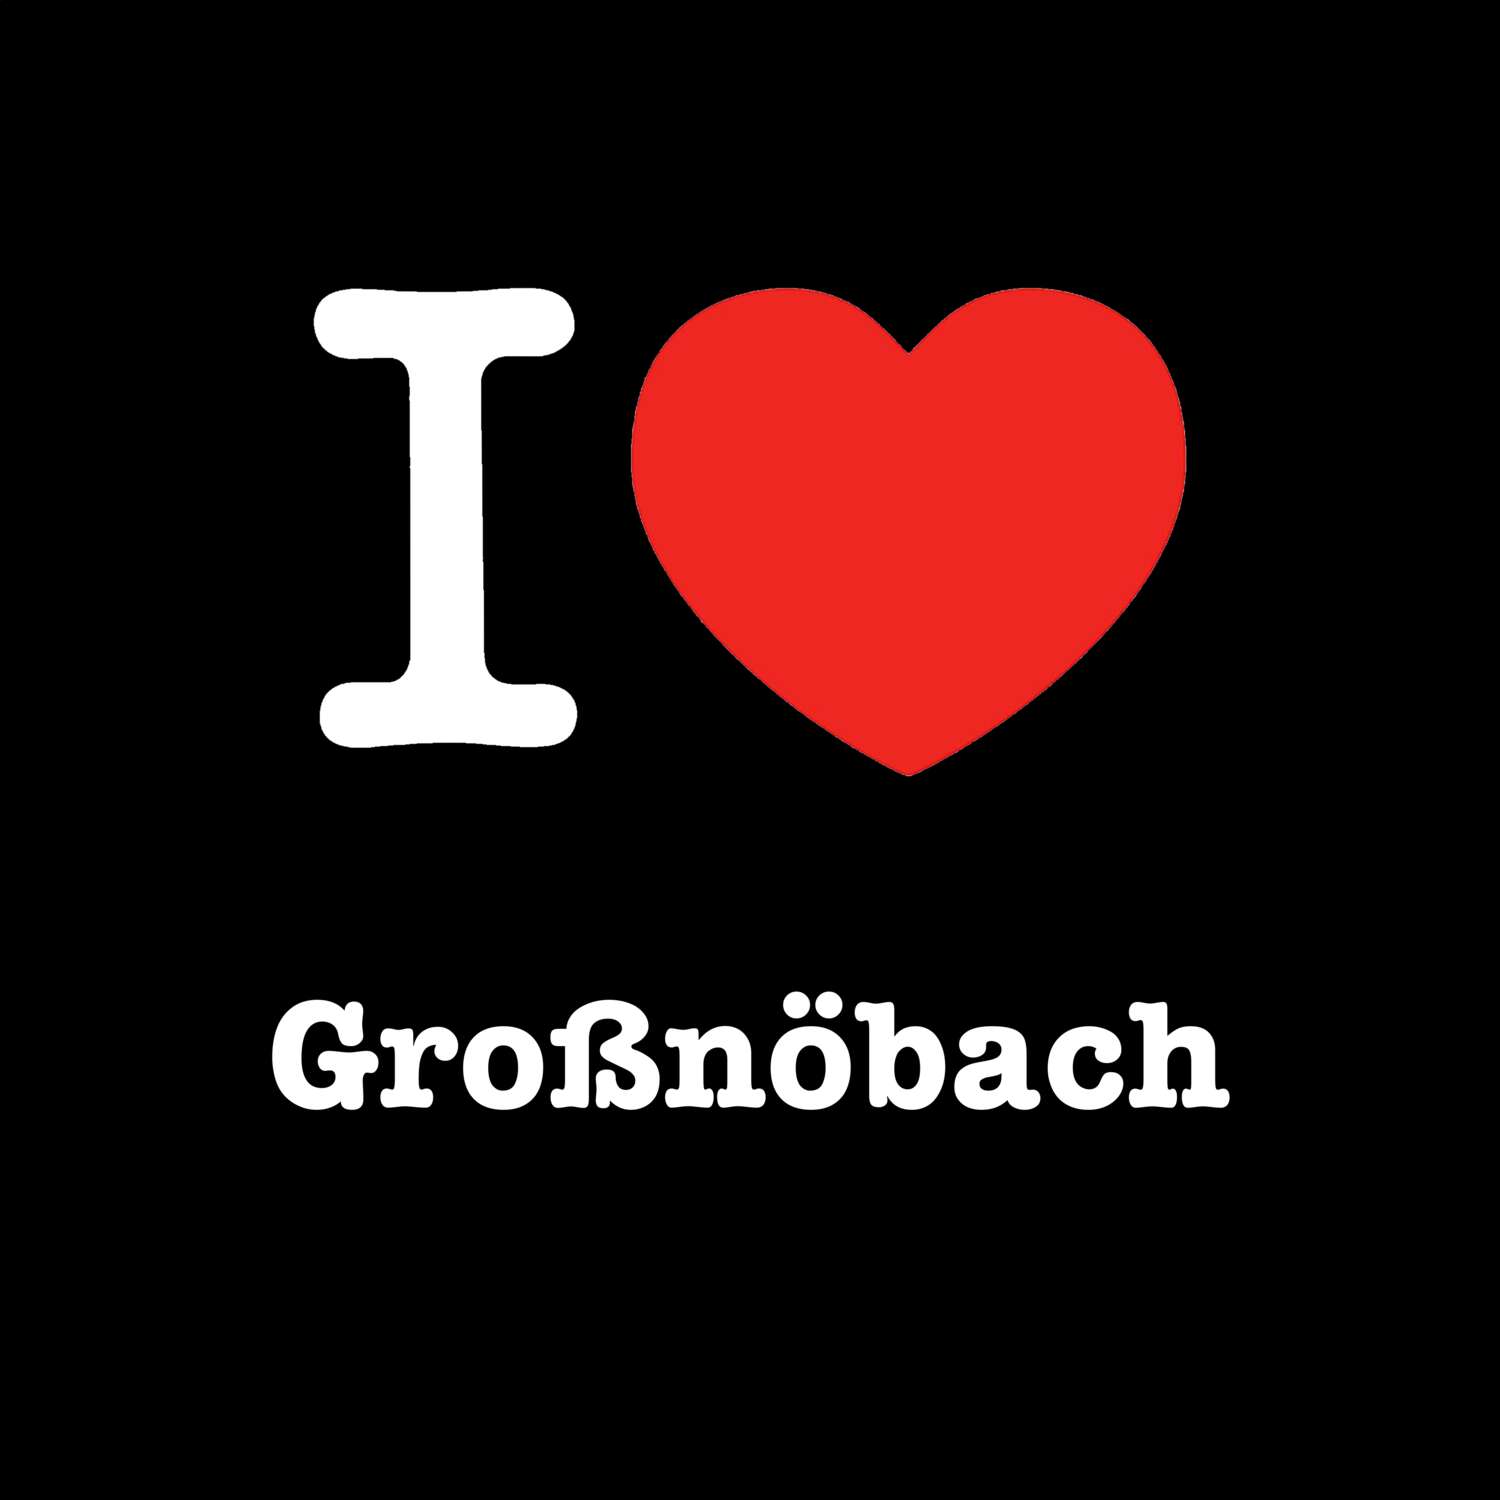 Großnöbach T-Shirt »I love«